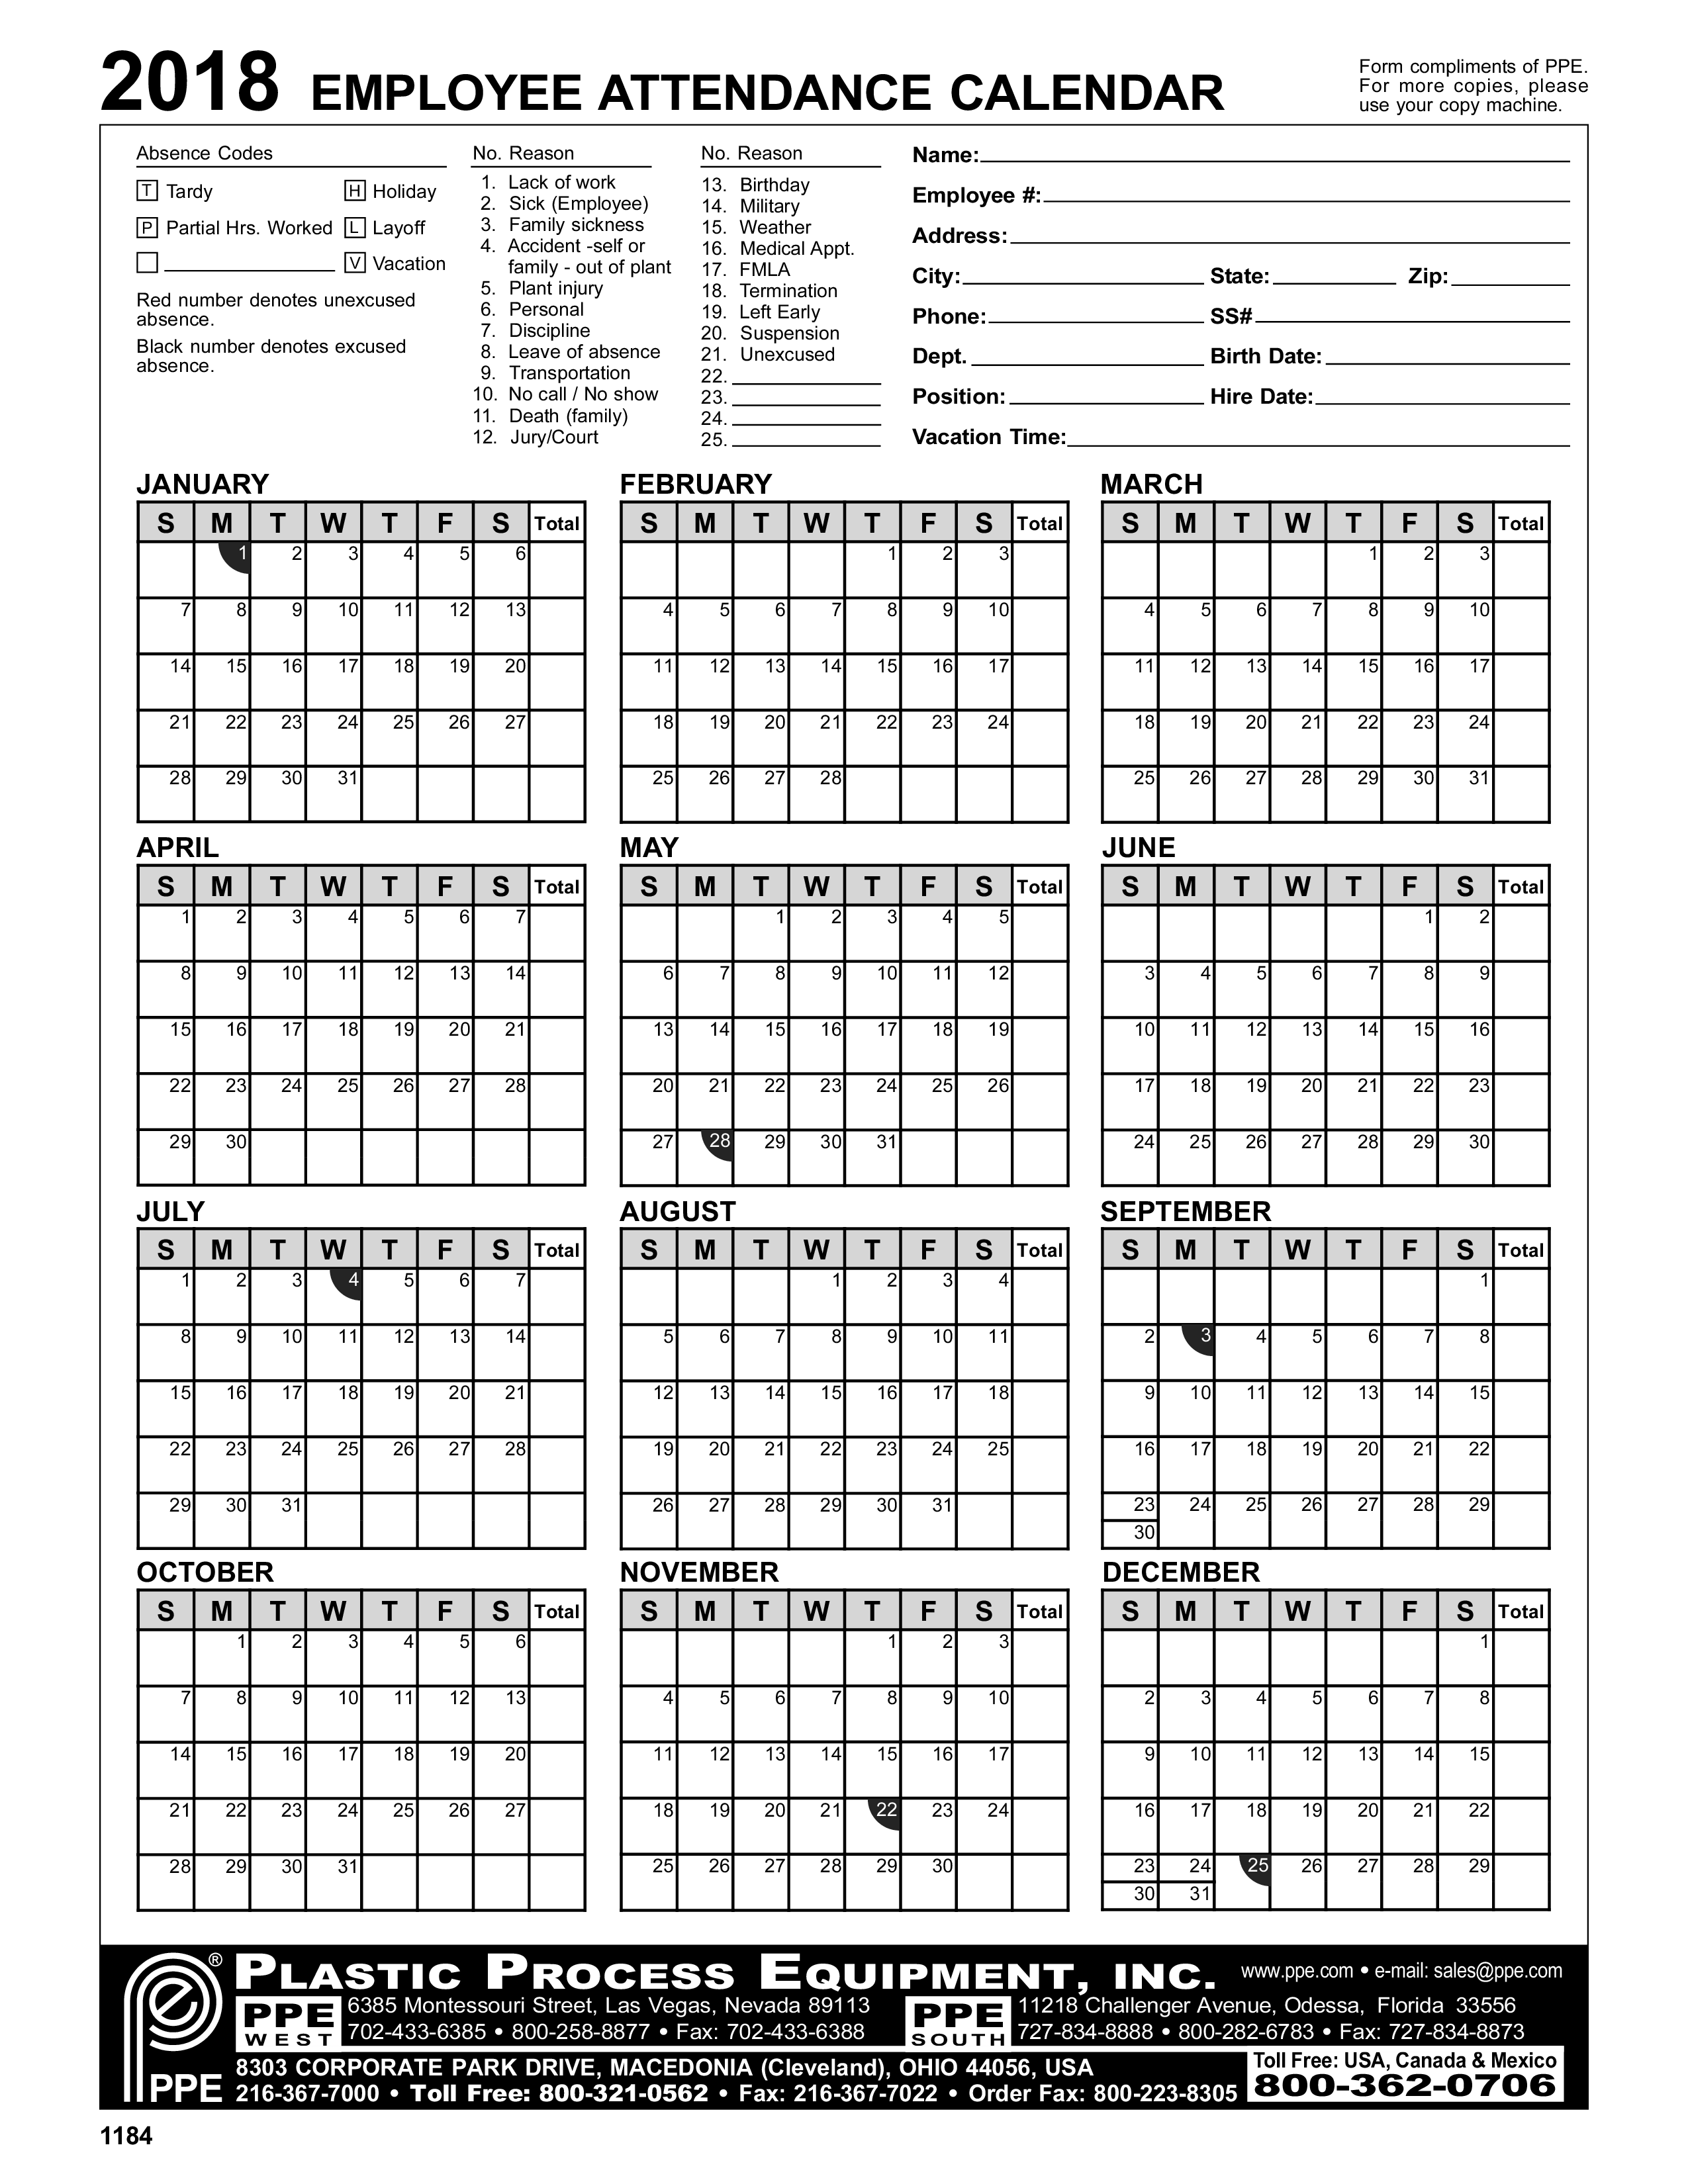 Employee Attendance Calendar - emmamcintyrephotography.com